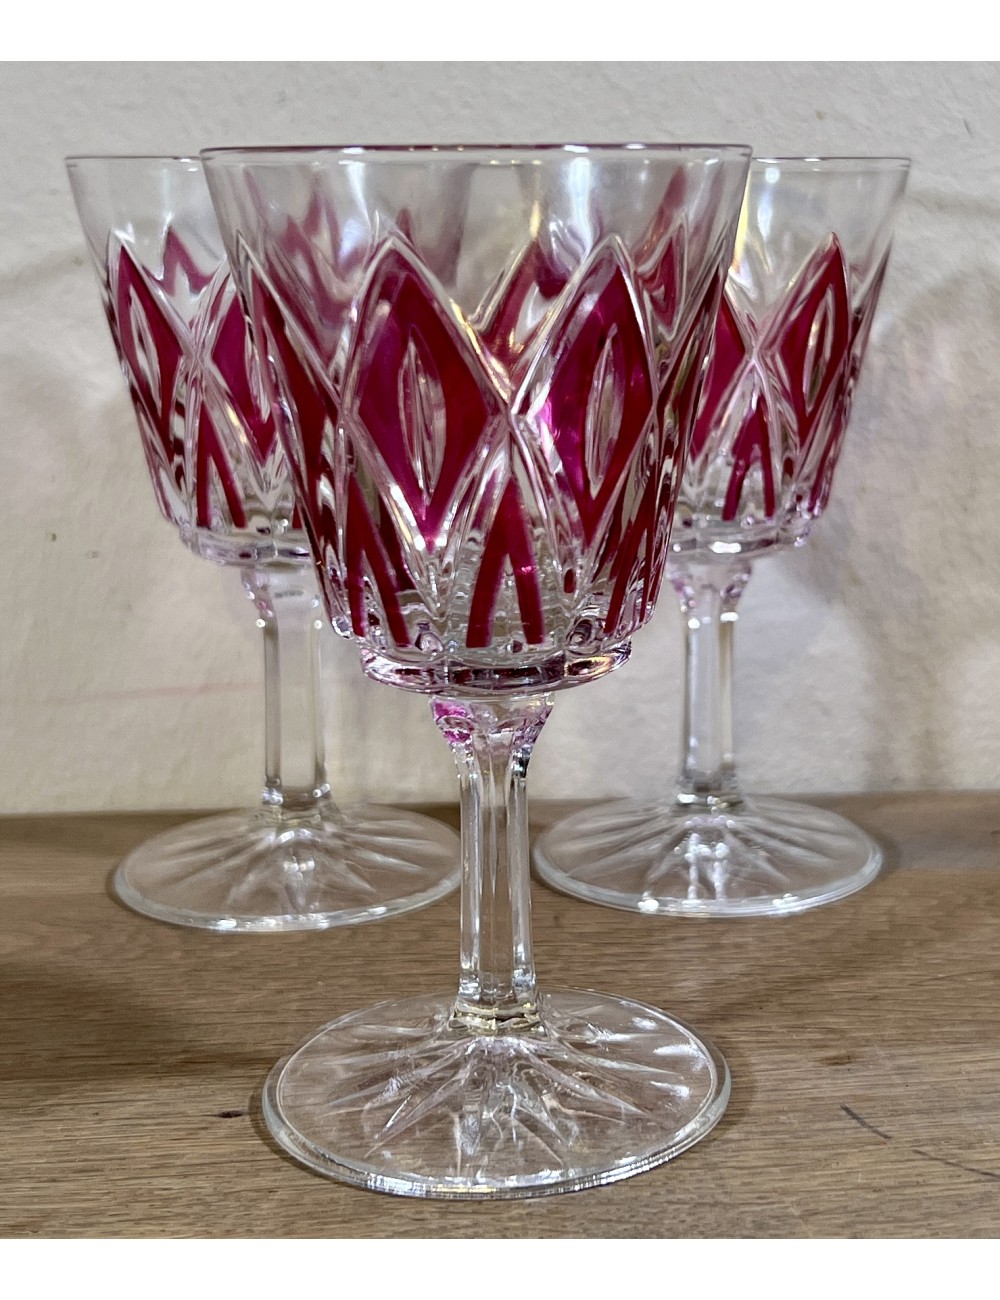 Glas / Likeurglas op voet - kleiner model - VMC Reims (Verreries Mècaniques Champenoises) - Harlequin in rood